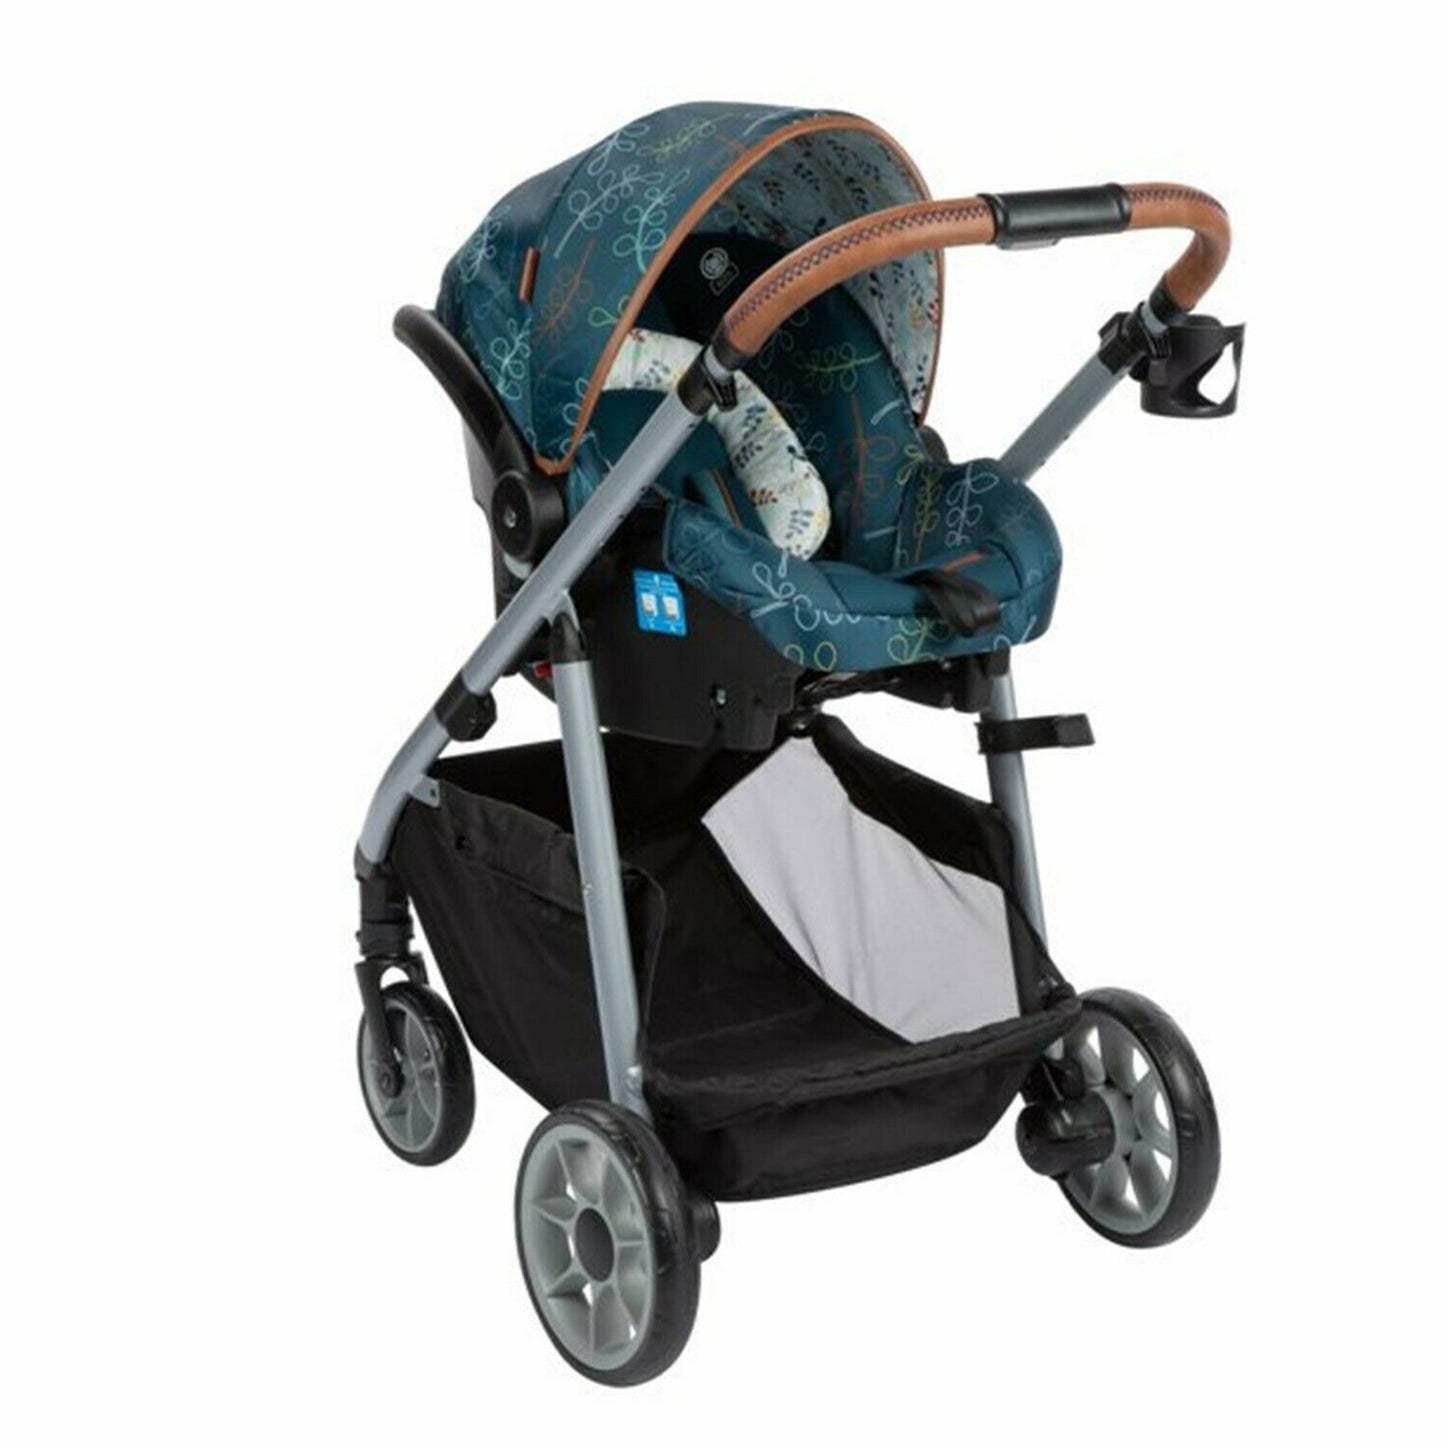 Baby Stroller with Car Seat Lynx 6 in 1 Modular Travel System Pram Combo